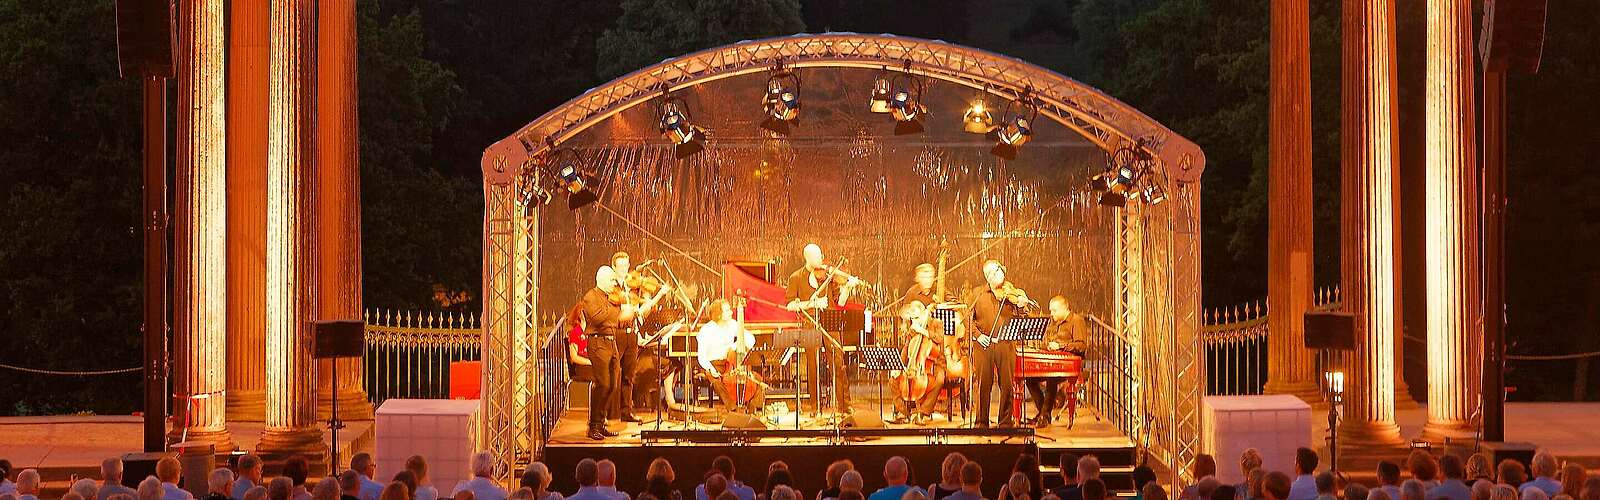 Musikfestspiele Potsdam,
        
    

        Foto: Fotograf / Lizenz - Media Import/André Stiebitz